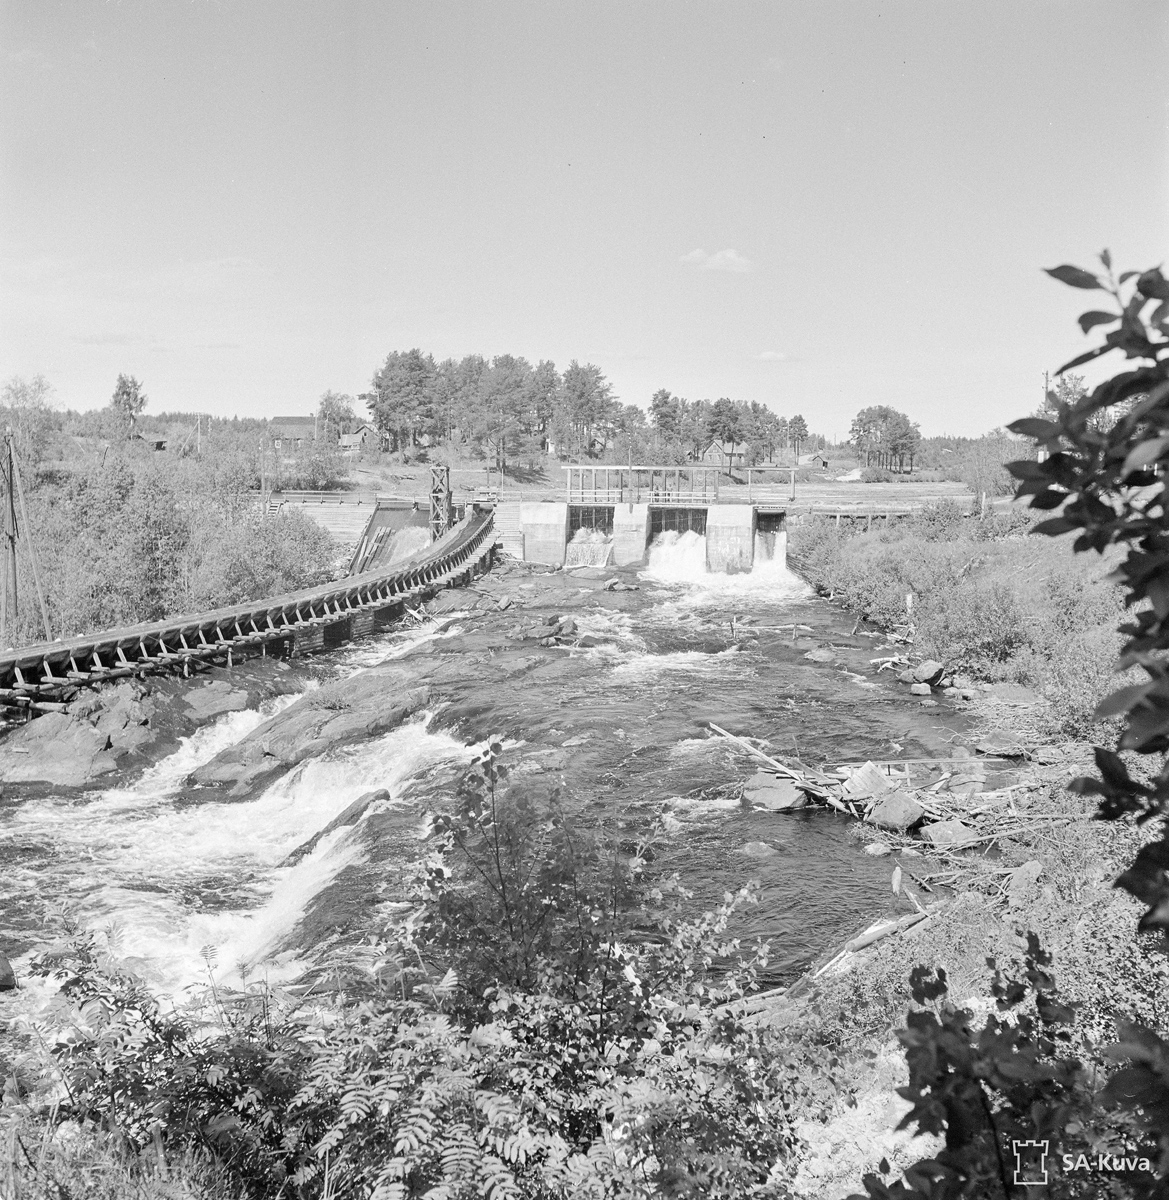 June 29, 1942. Ylä-Uuksunkoski hydroelectric power plant